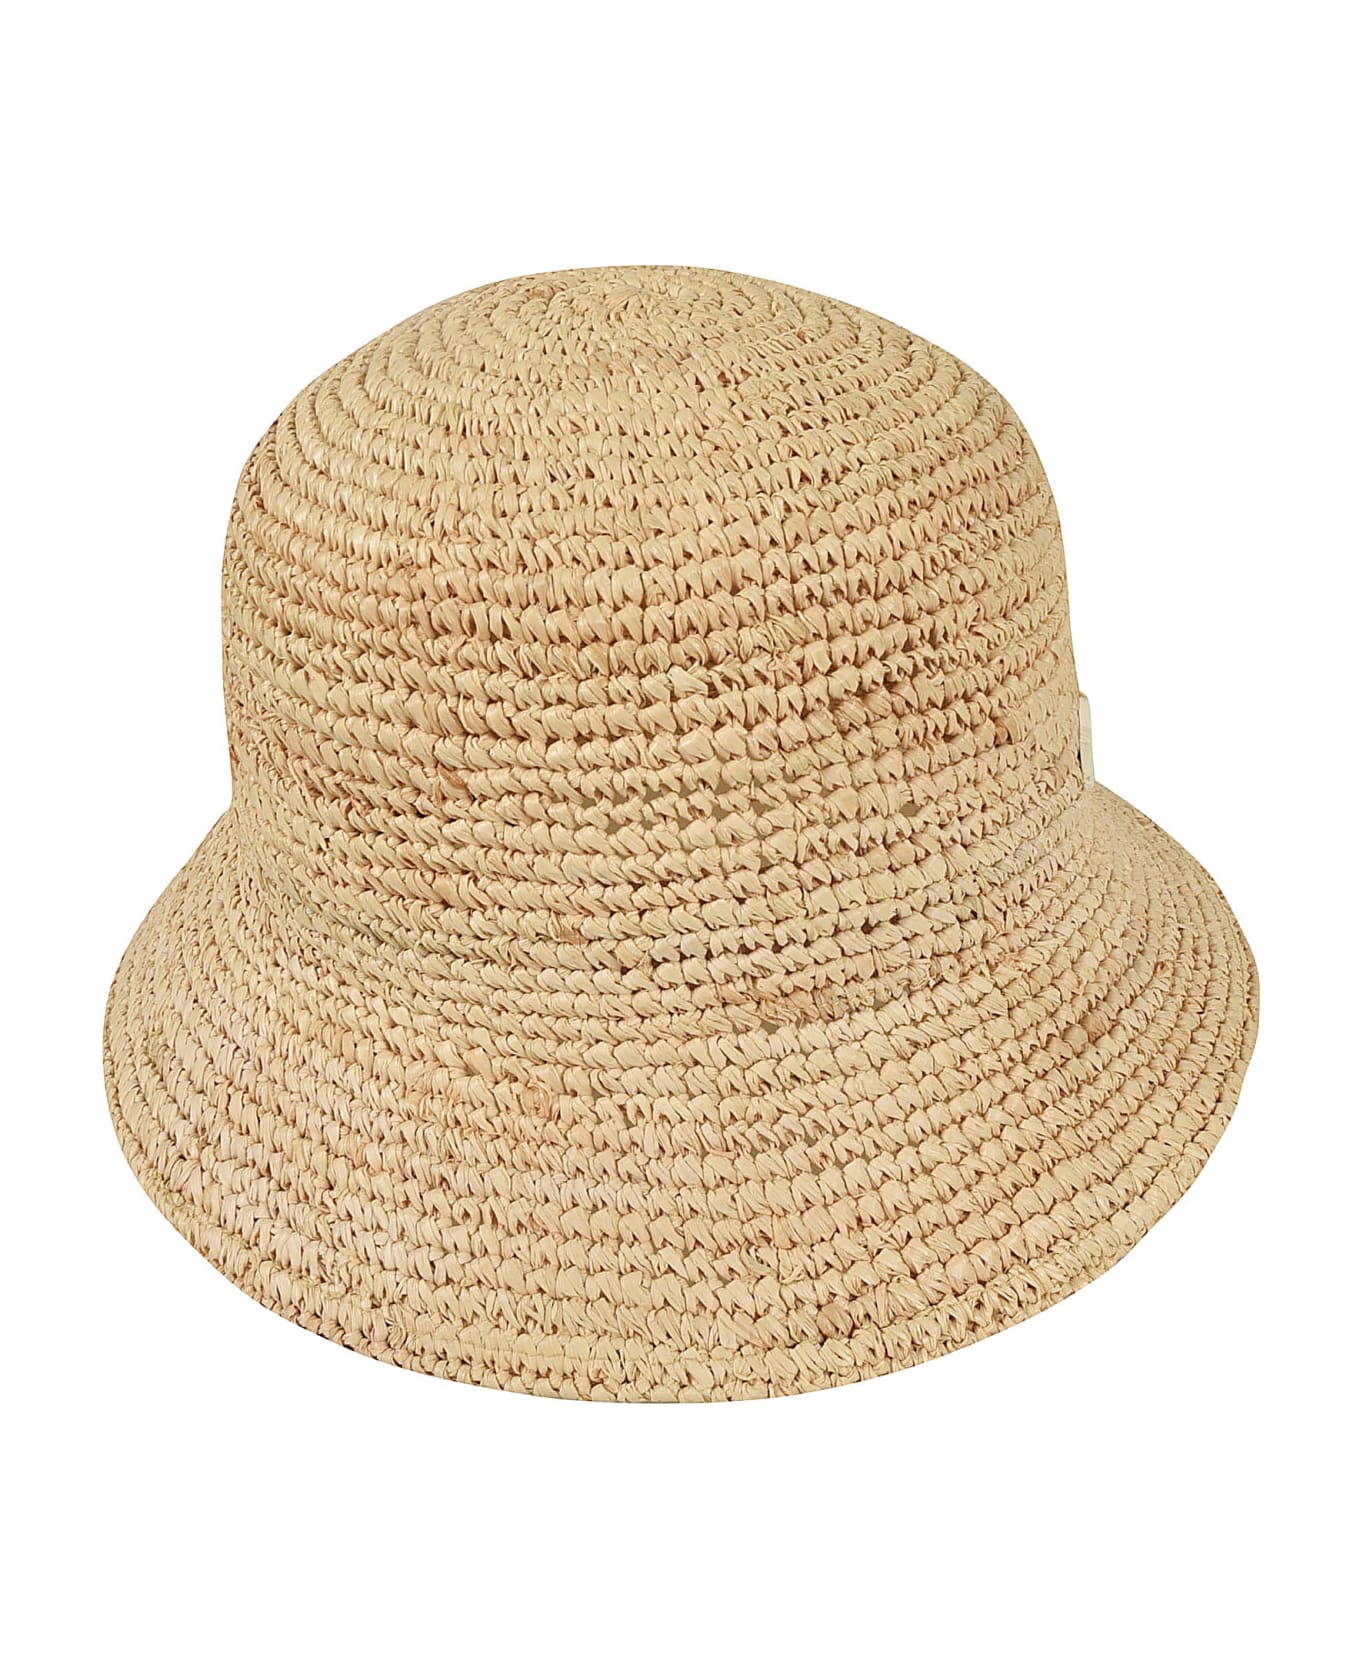 Borsalino Rafia Crochet Bucket Hat - Naturale